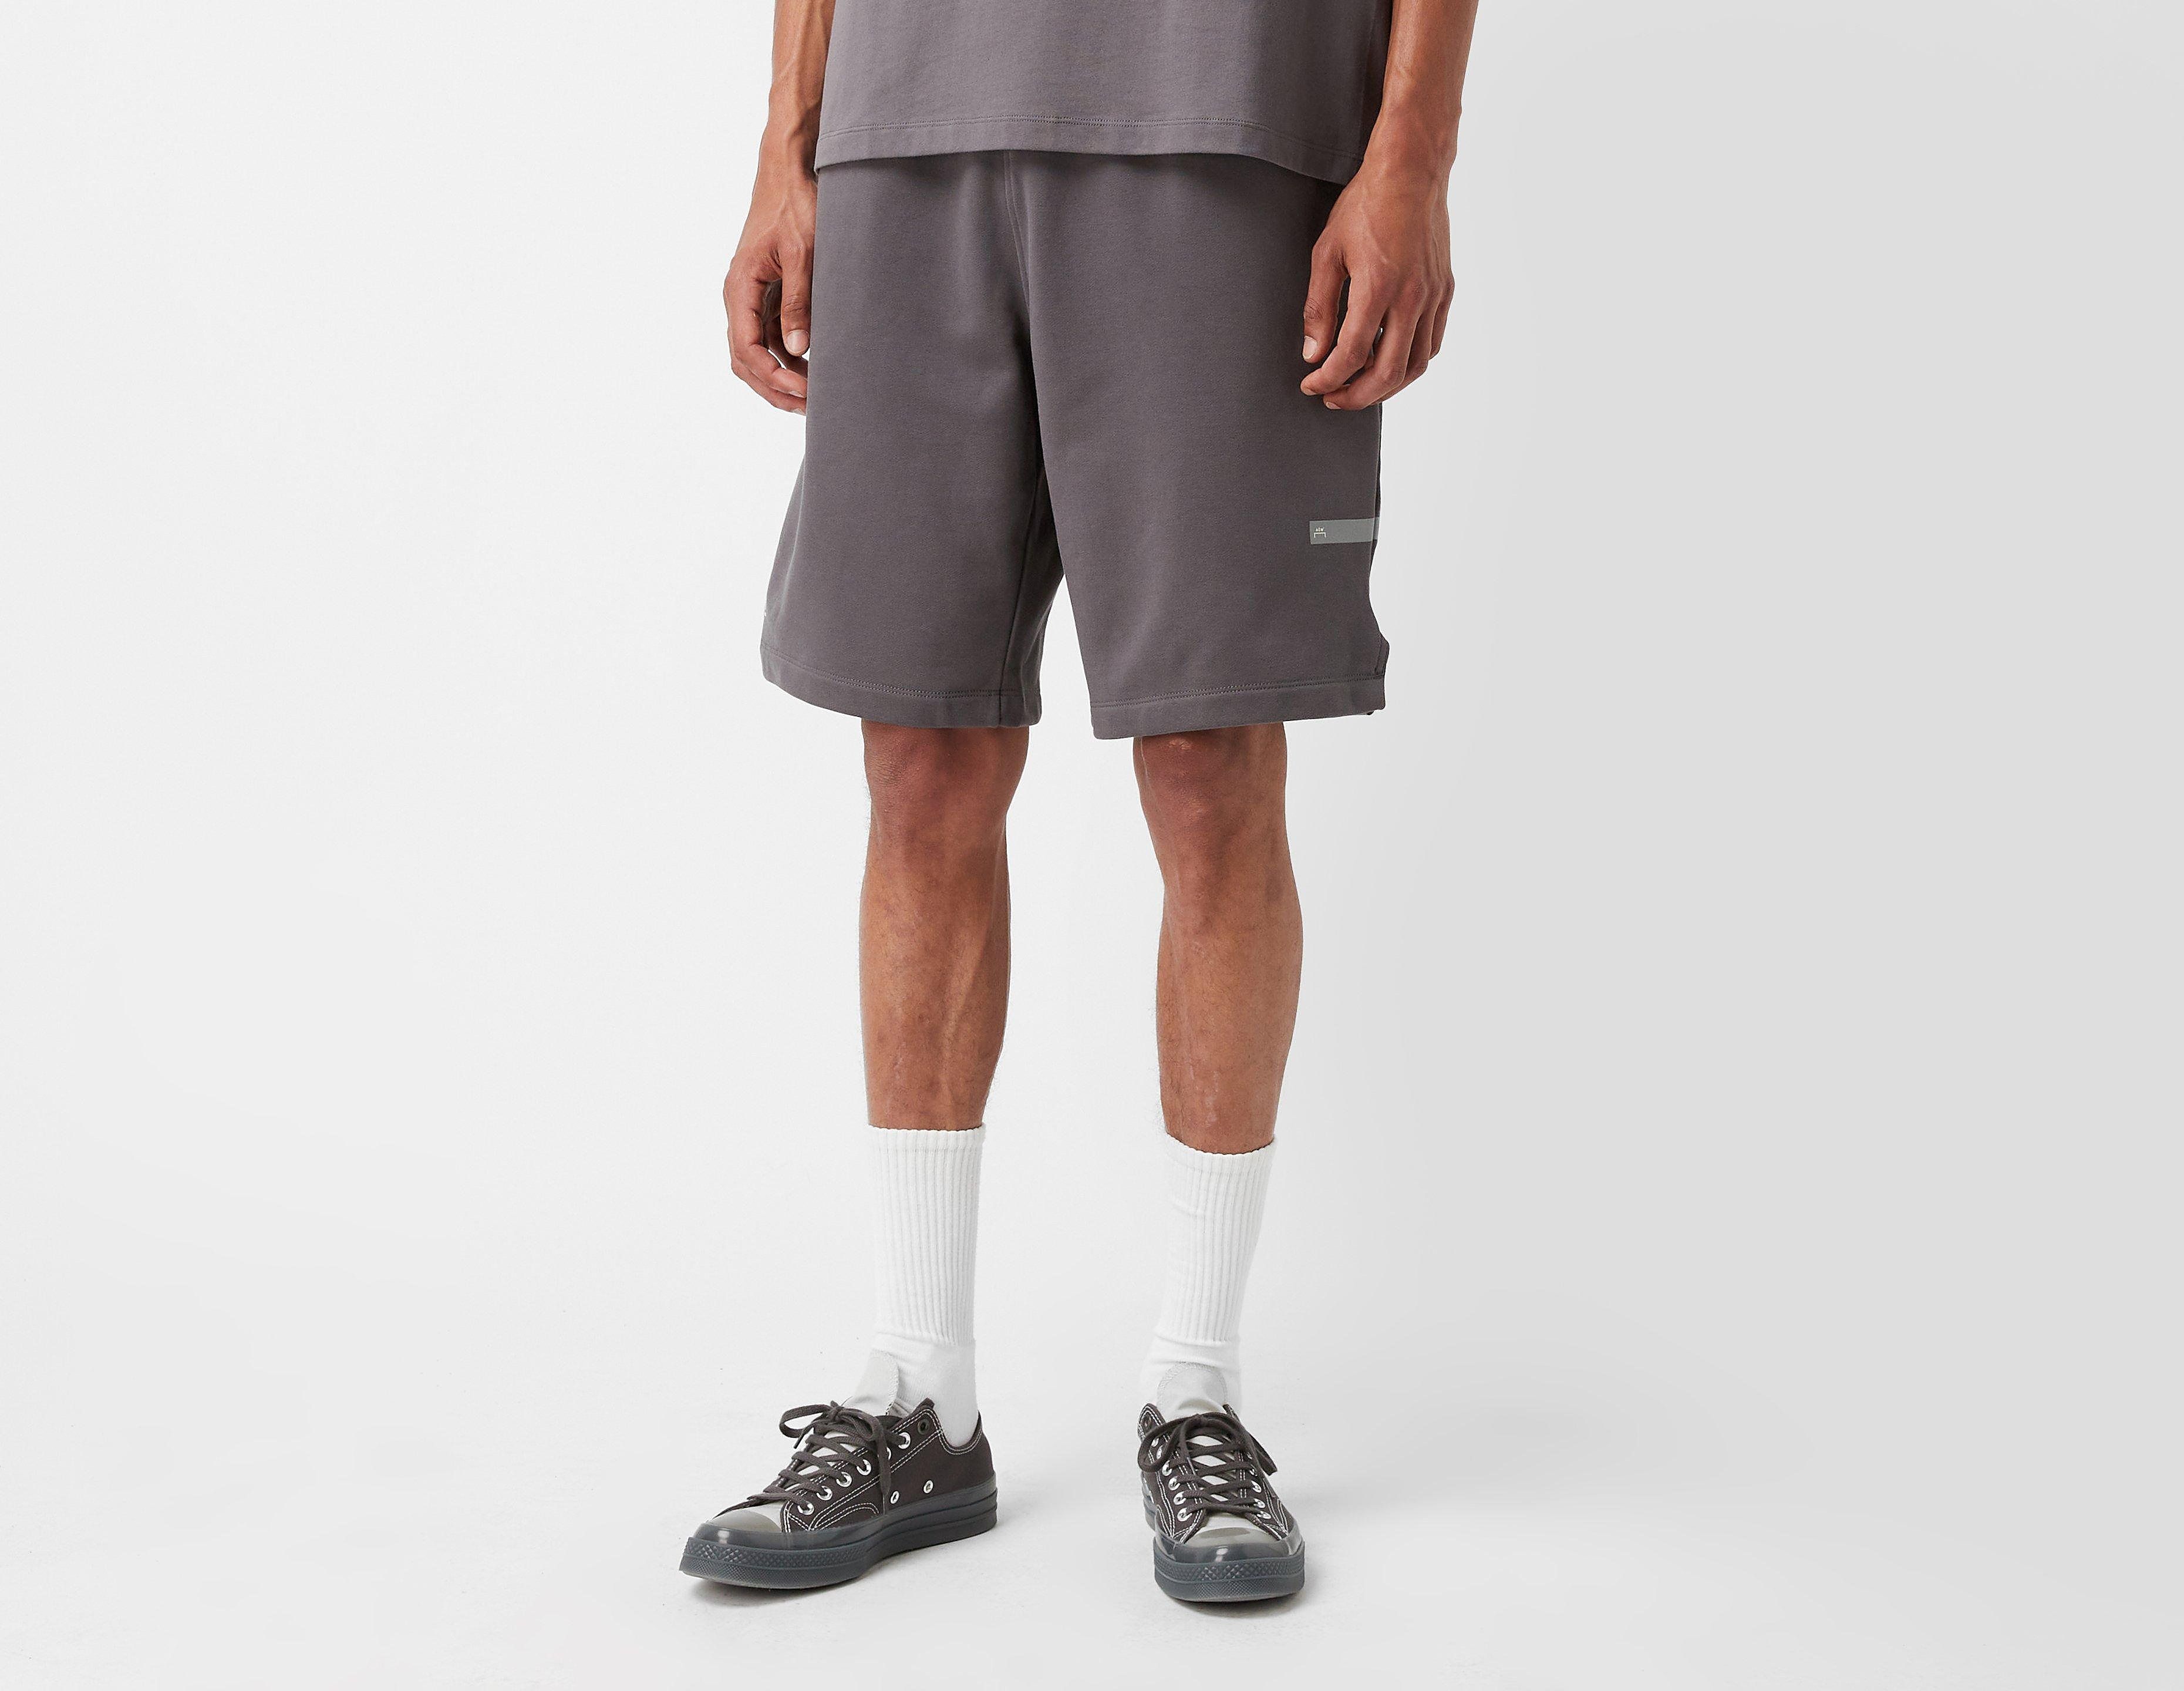 converse x a-cold-wall shorts, grey